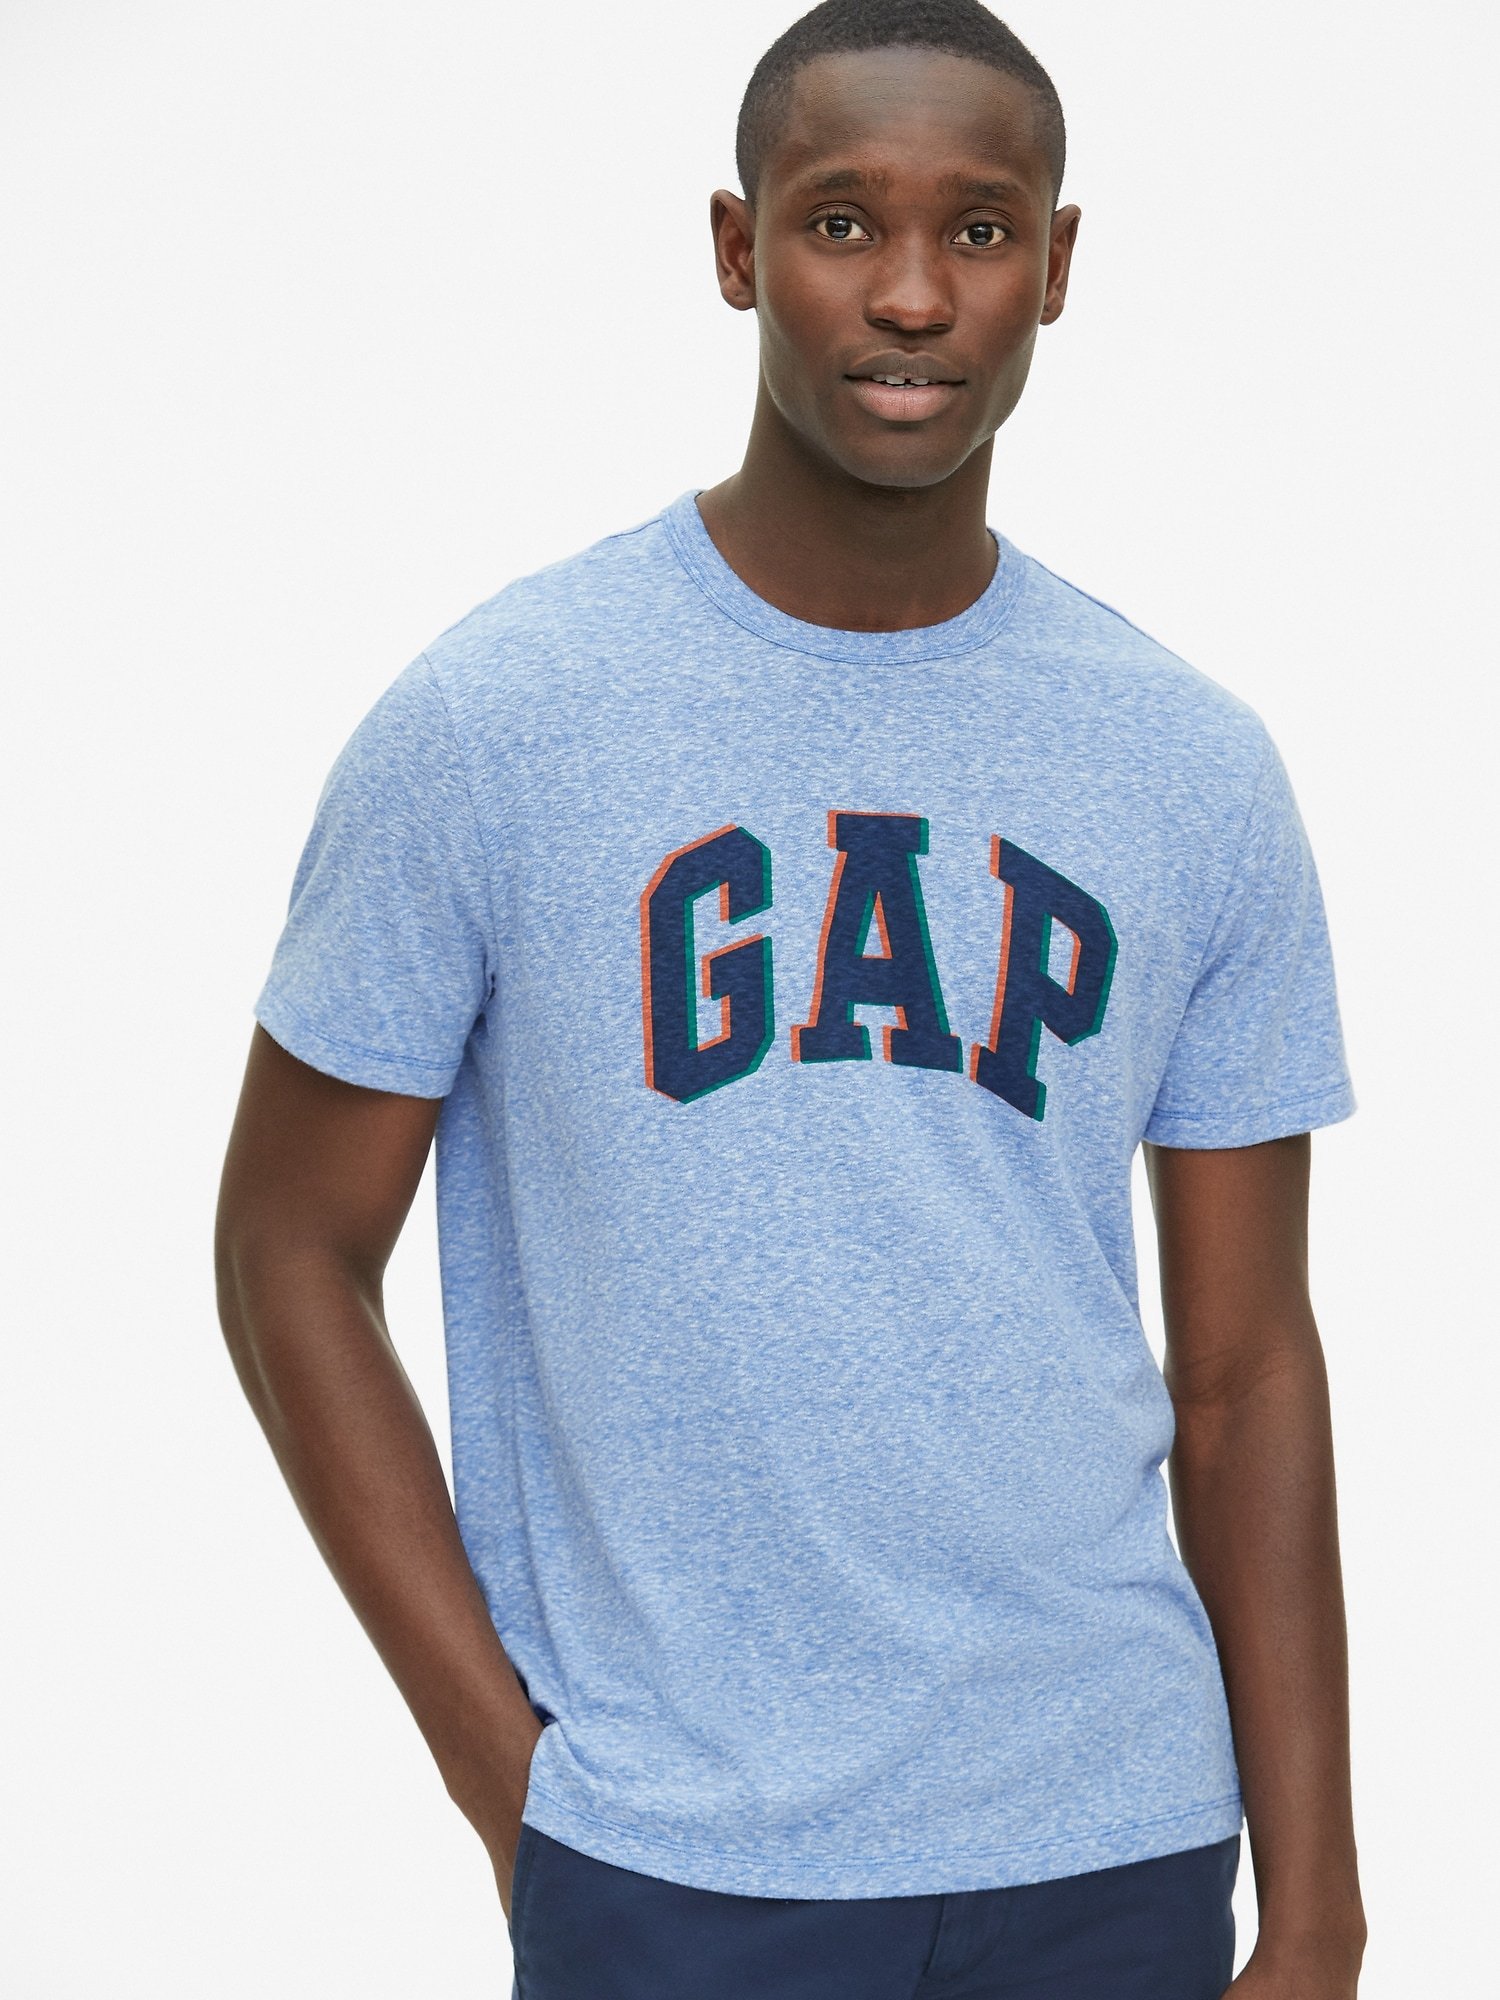 Gap Logo 3D T-Shirt product image